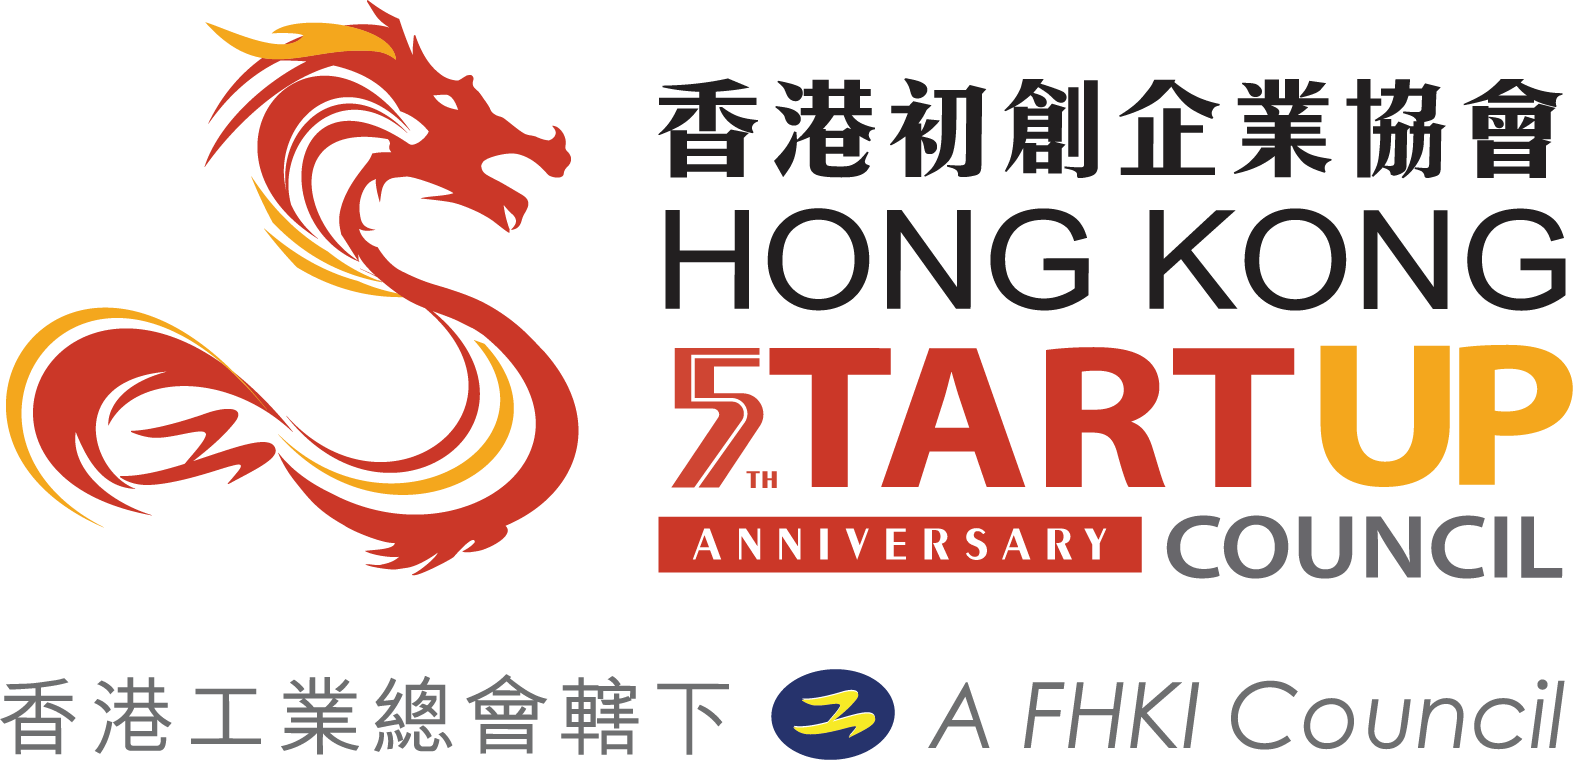 HK Startup Council